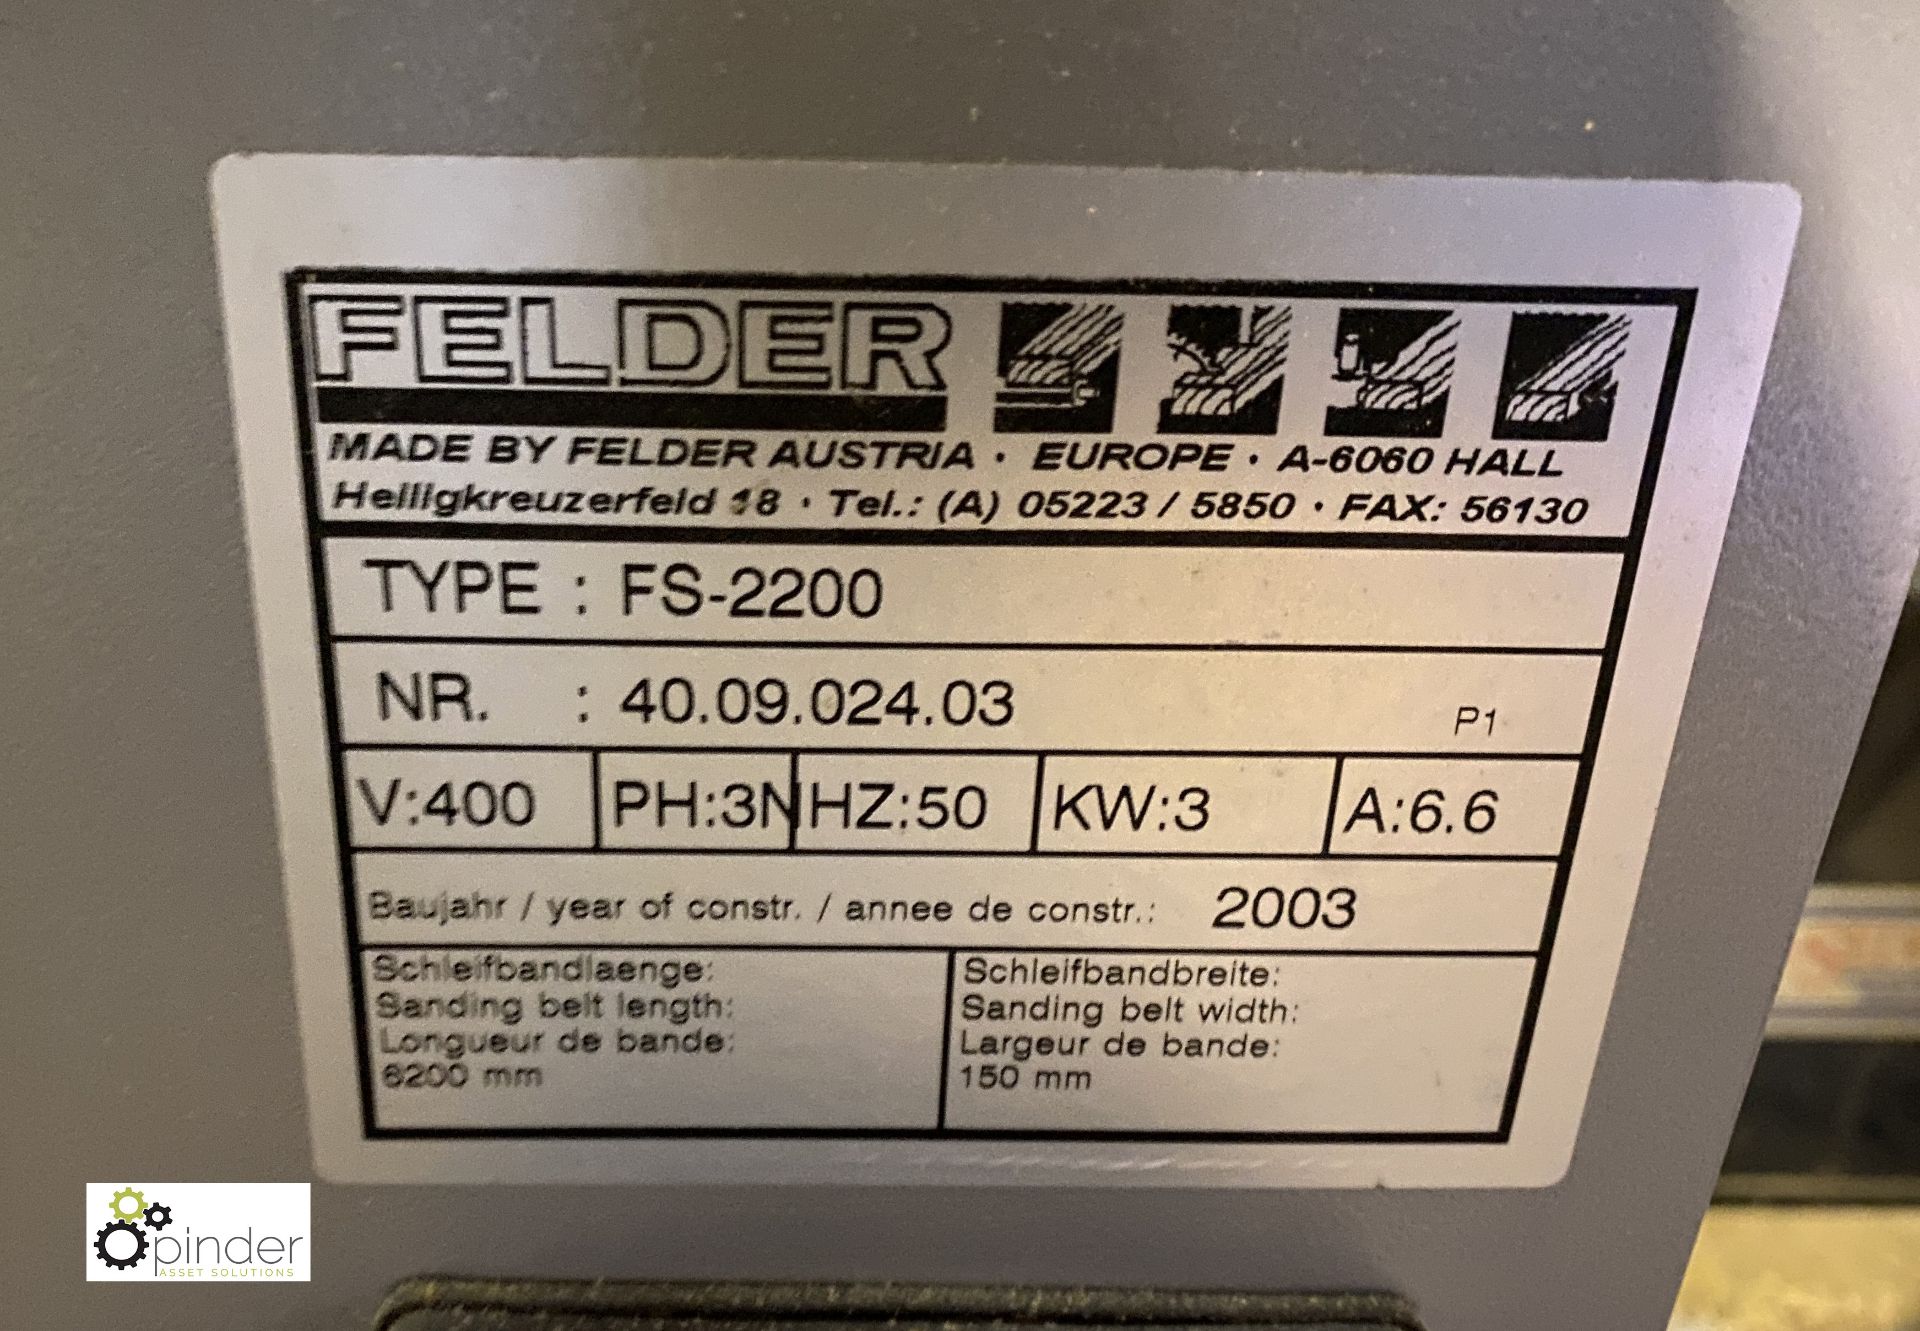 Felder FS2200 Belt and Pad Sander, 400volts, year 2003, serial number 40.09.024.03, 2200mm ( - Image 6 of 9